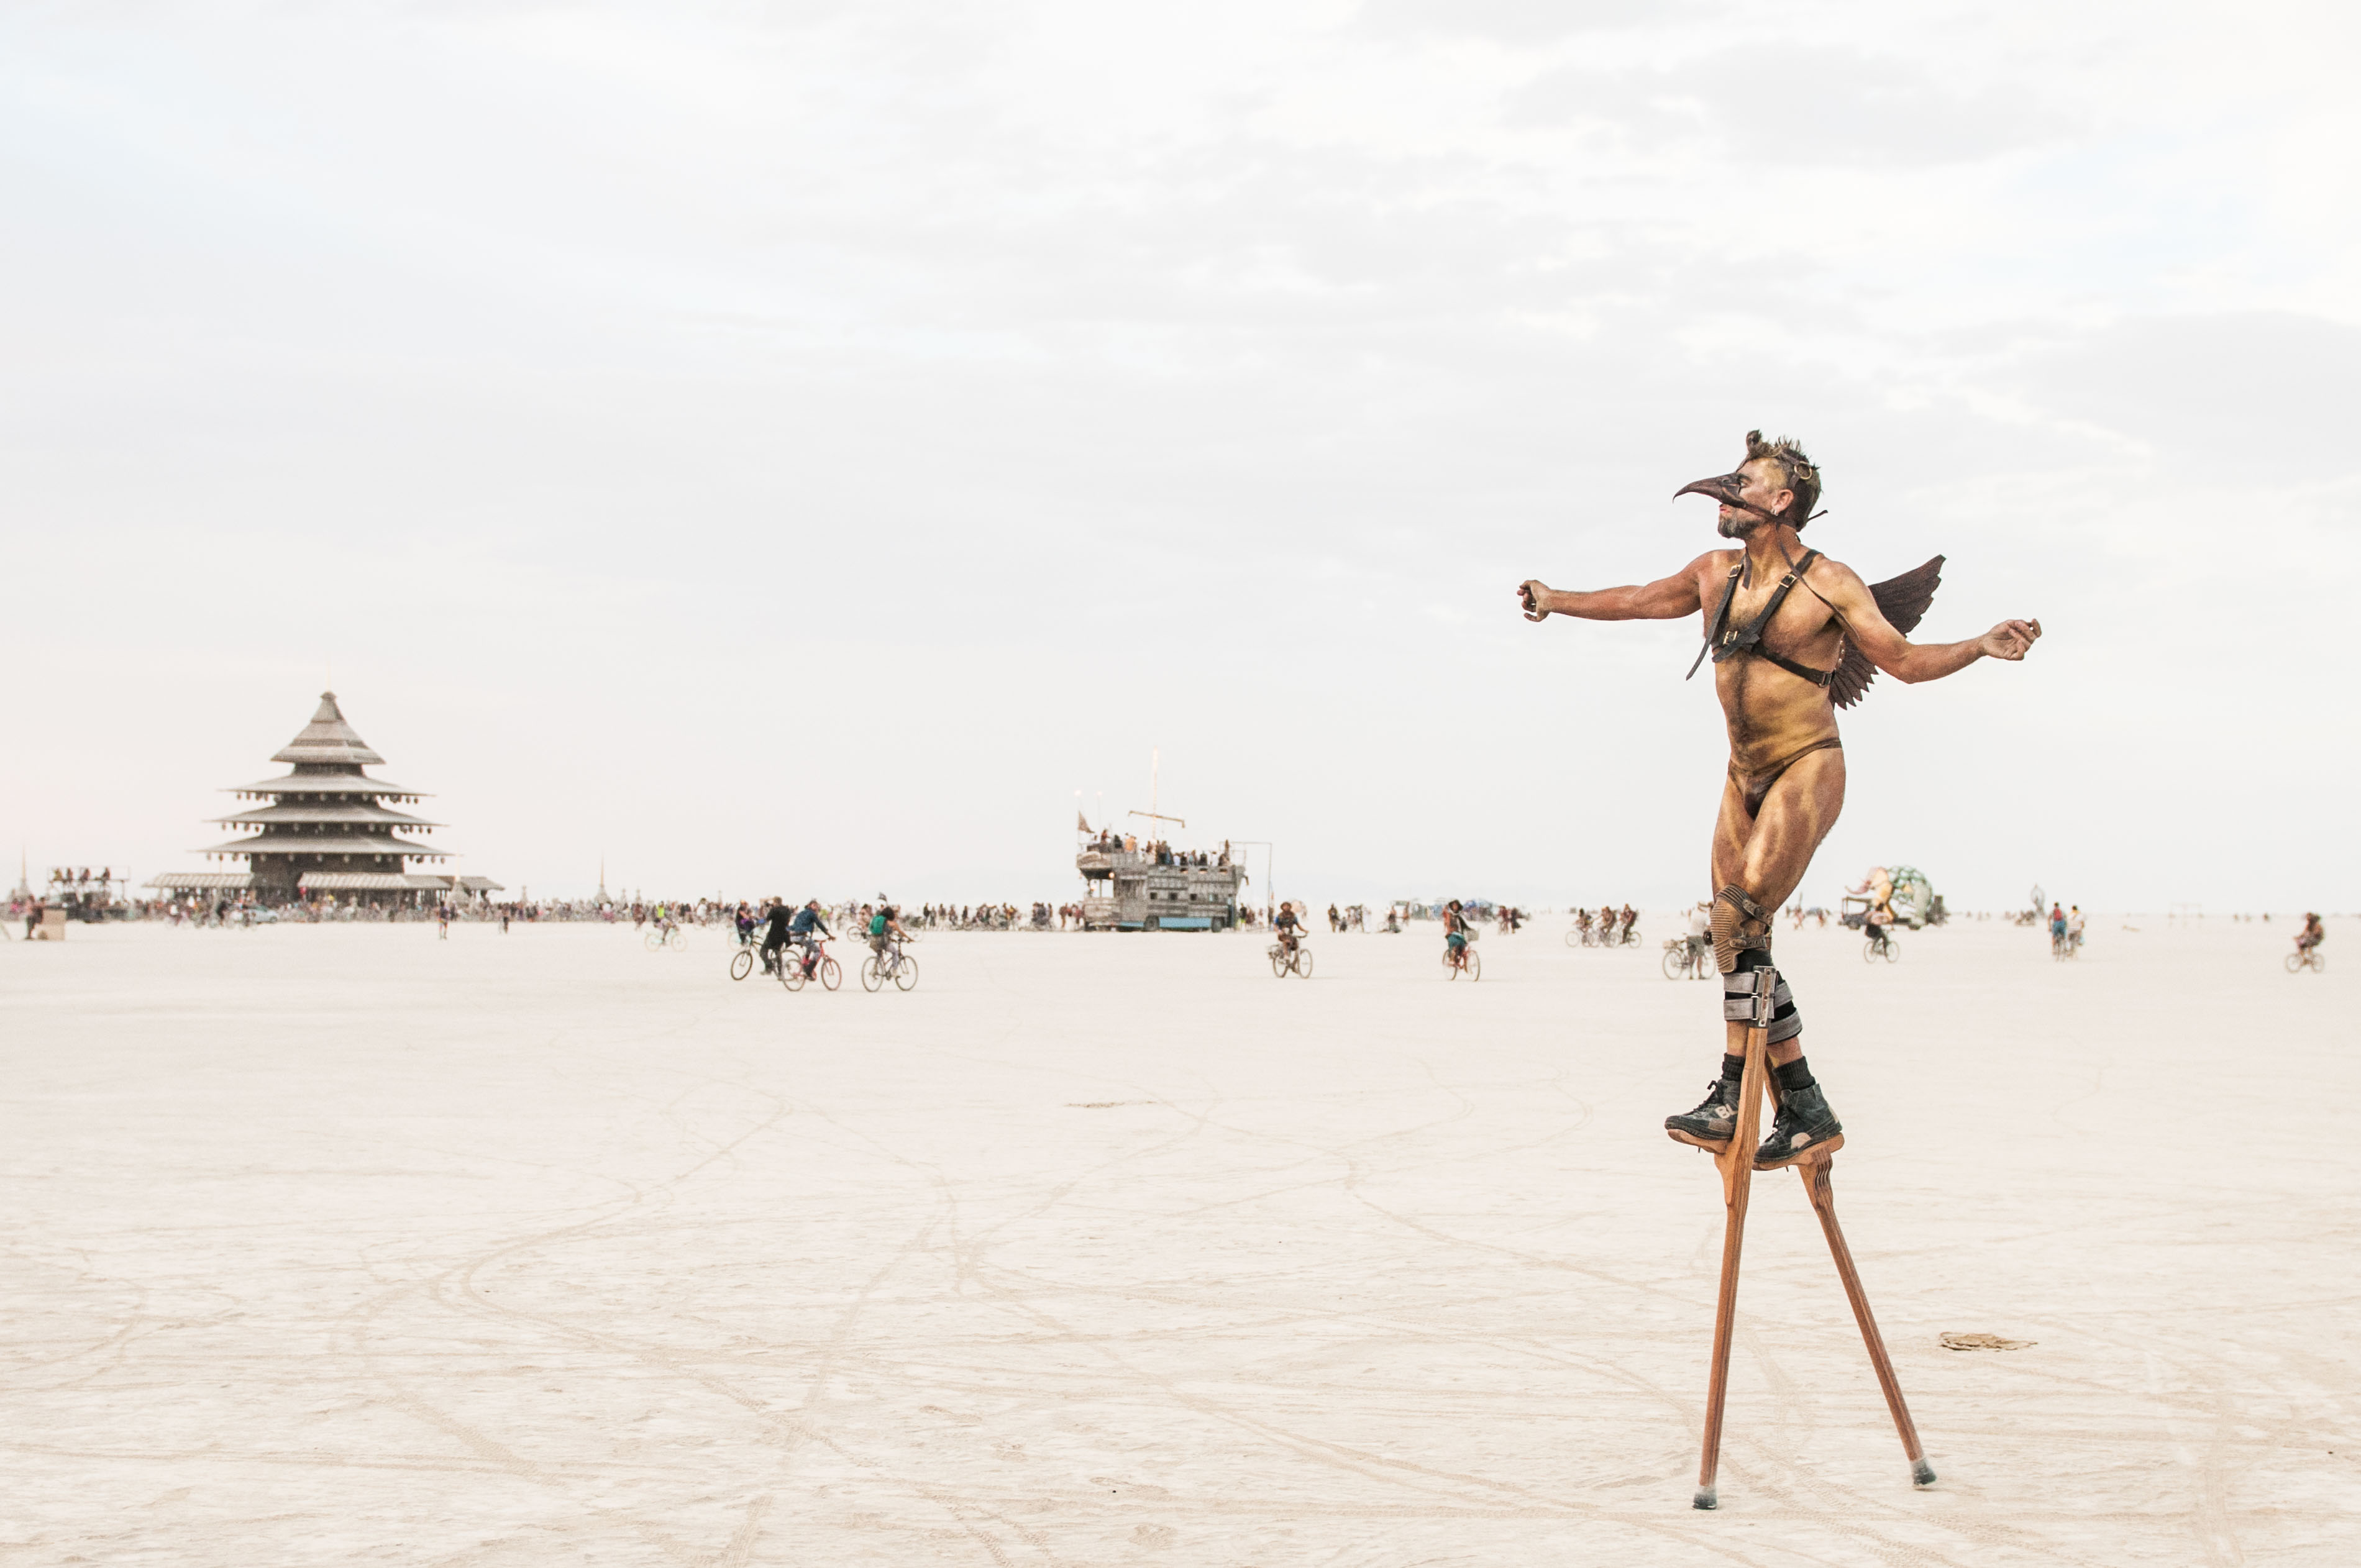 These surreal photos celebrate the desert utopia of Burning Man.